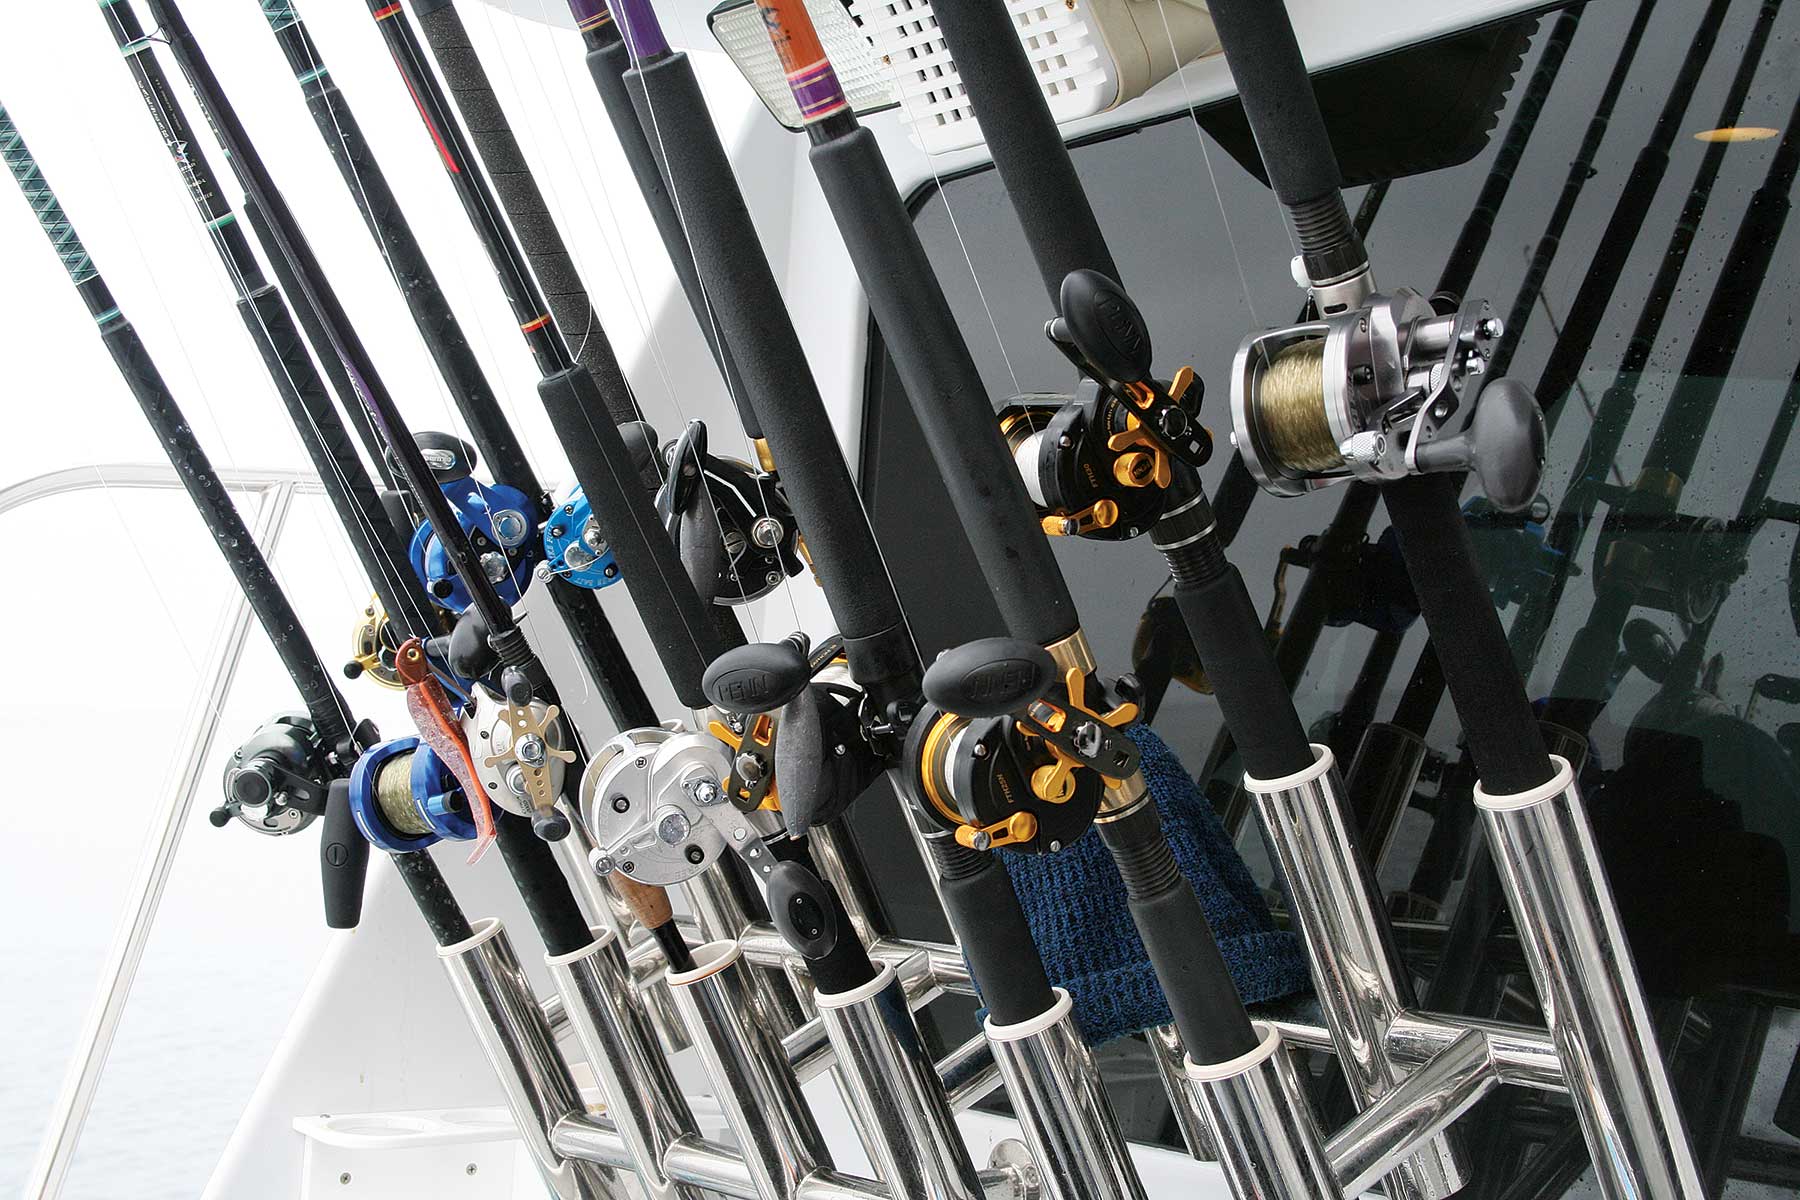 T-Top Fishing Rod Holder - Adjustable Swivel Rod Holder